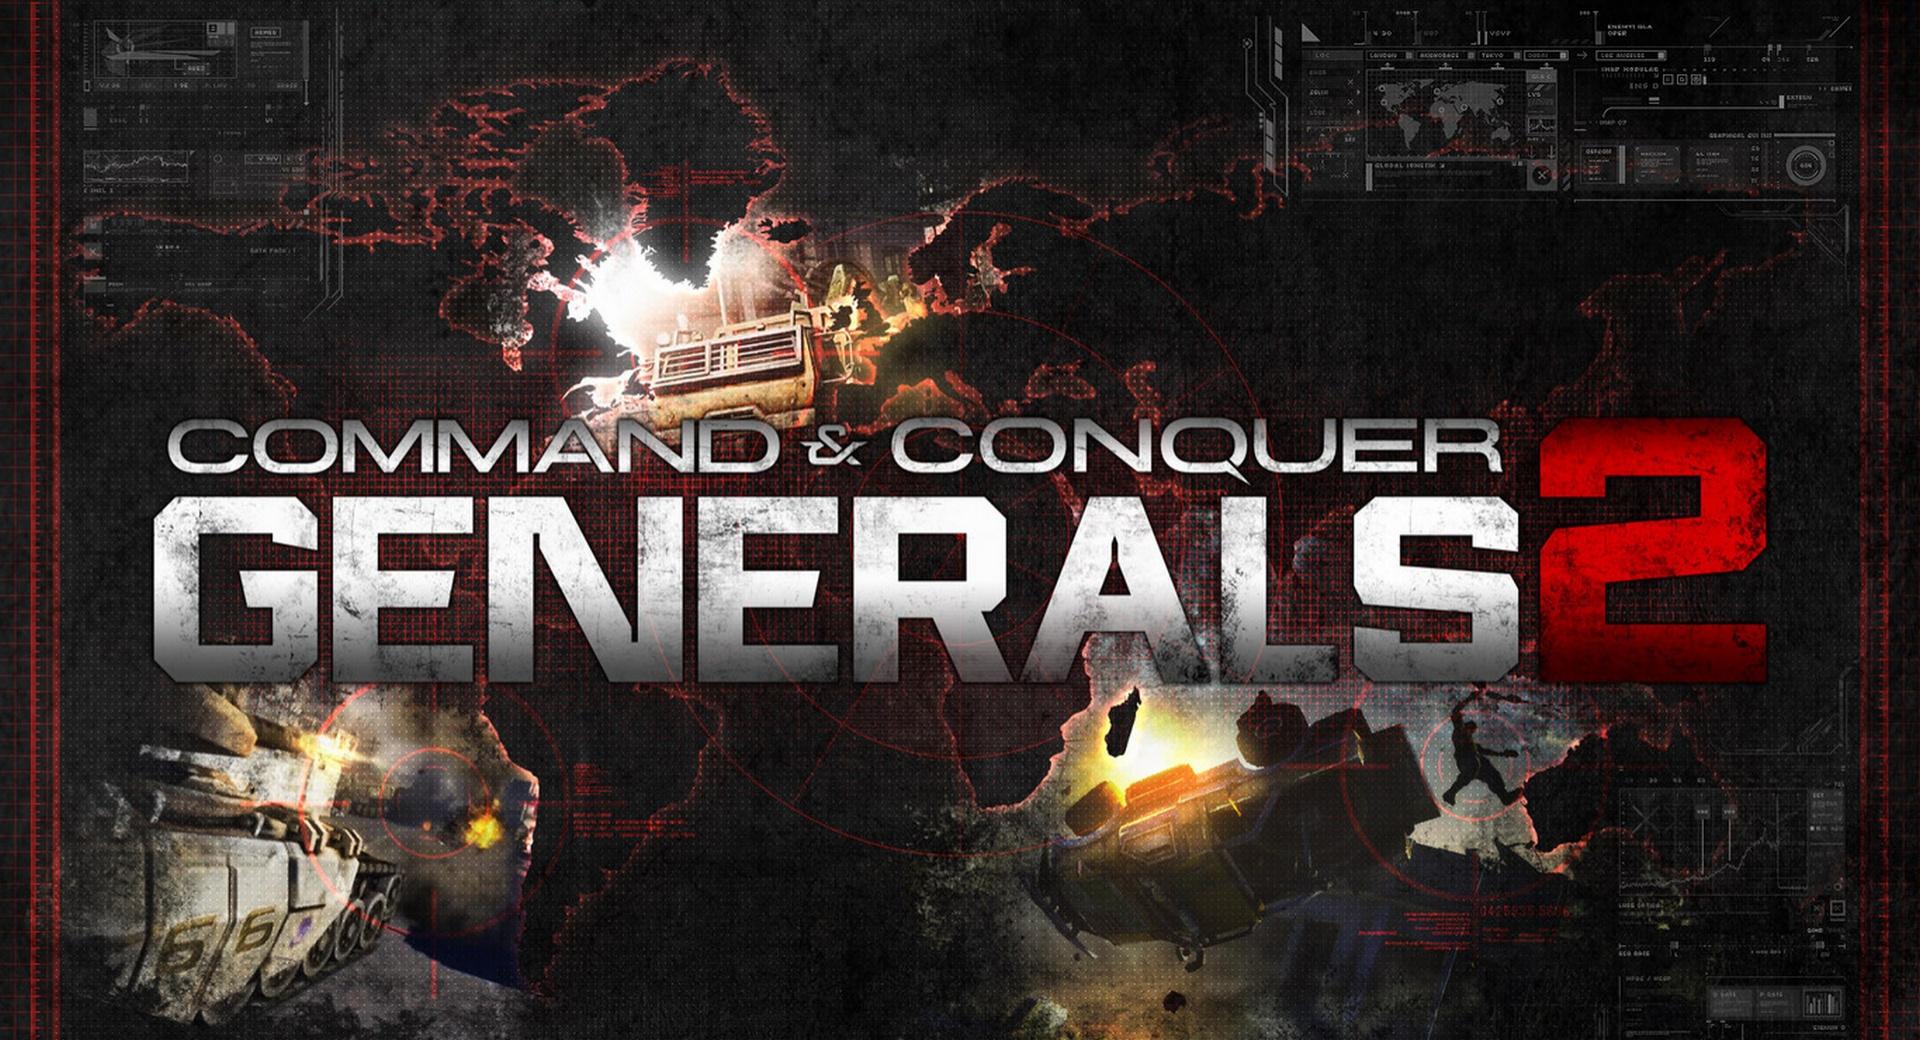 CC Generals 2 at 1024 x 1024 iPad size wallpapers HD quality